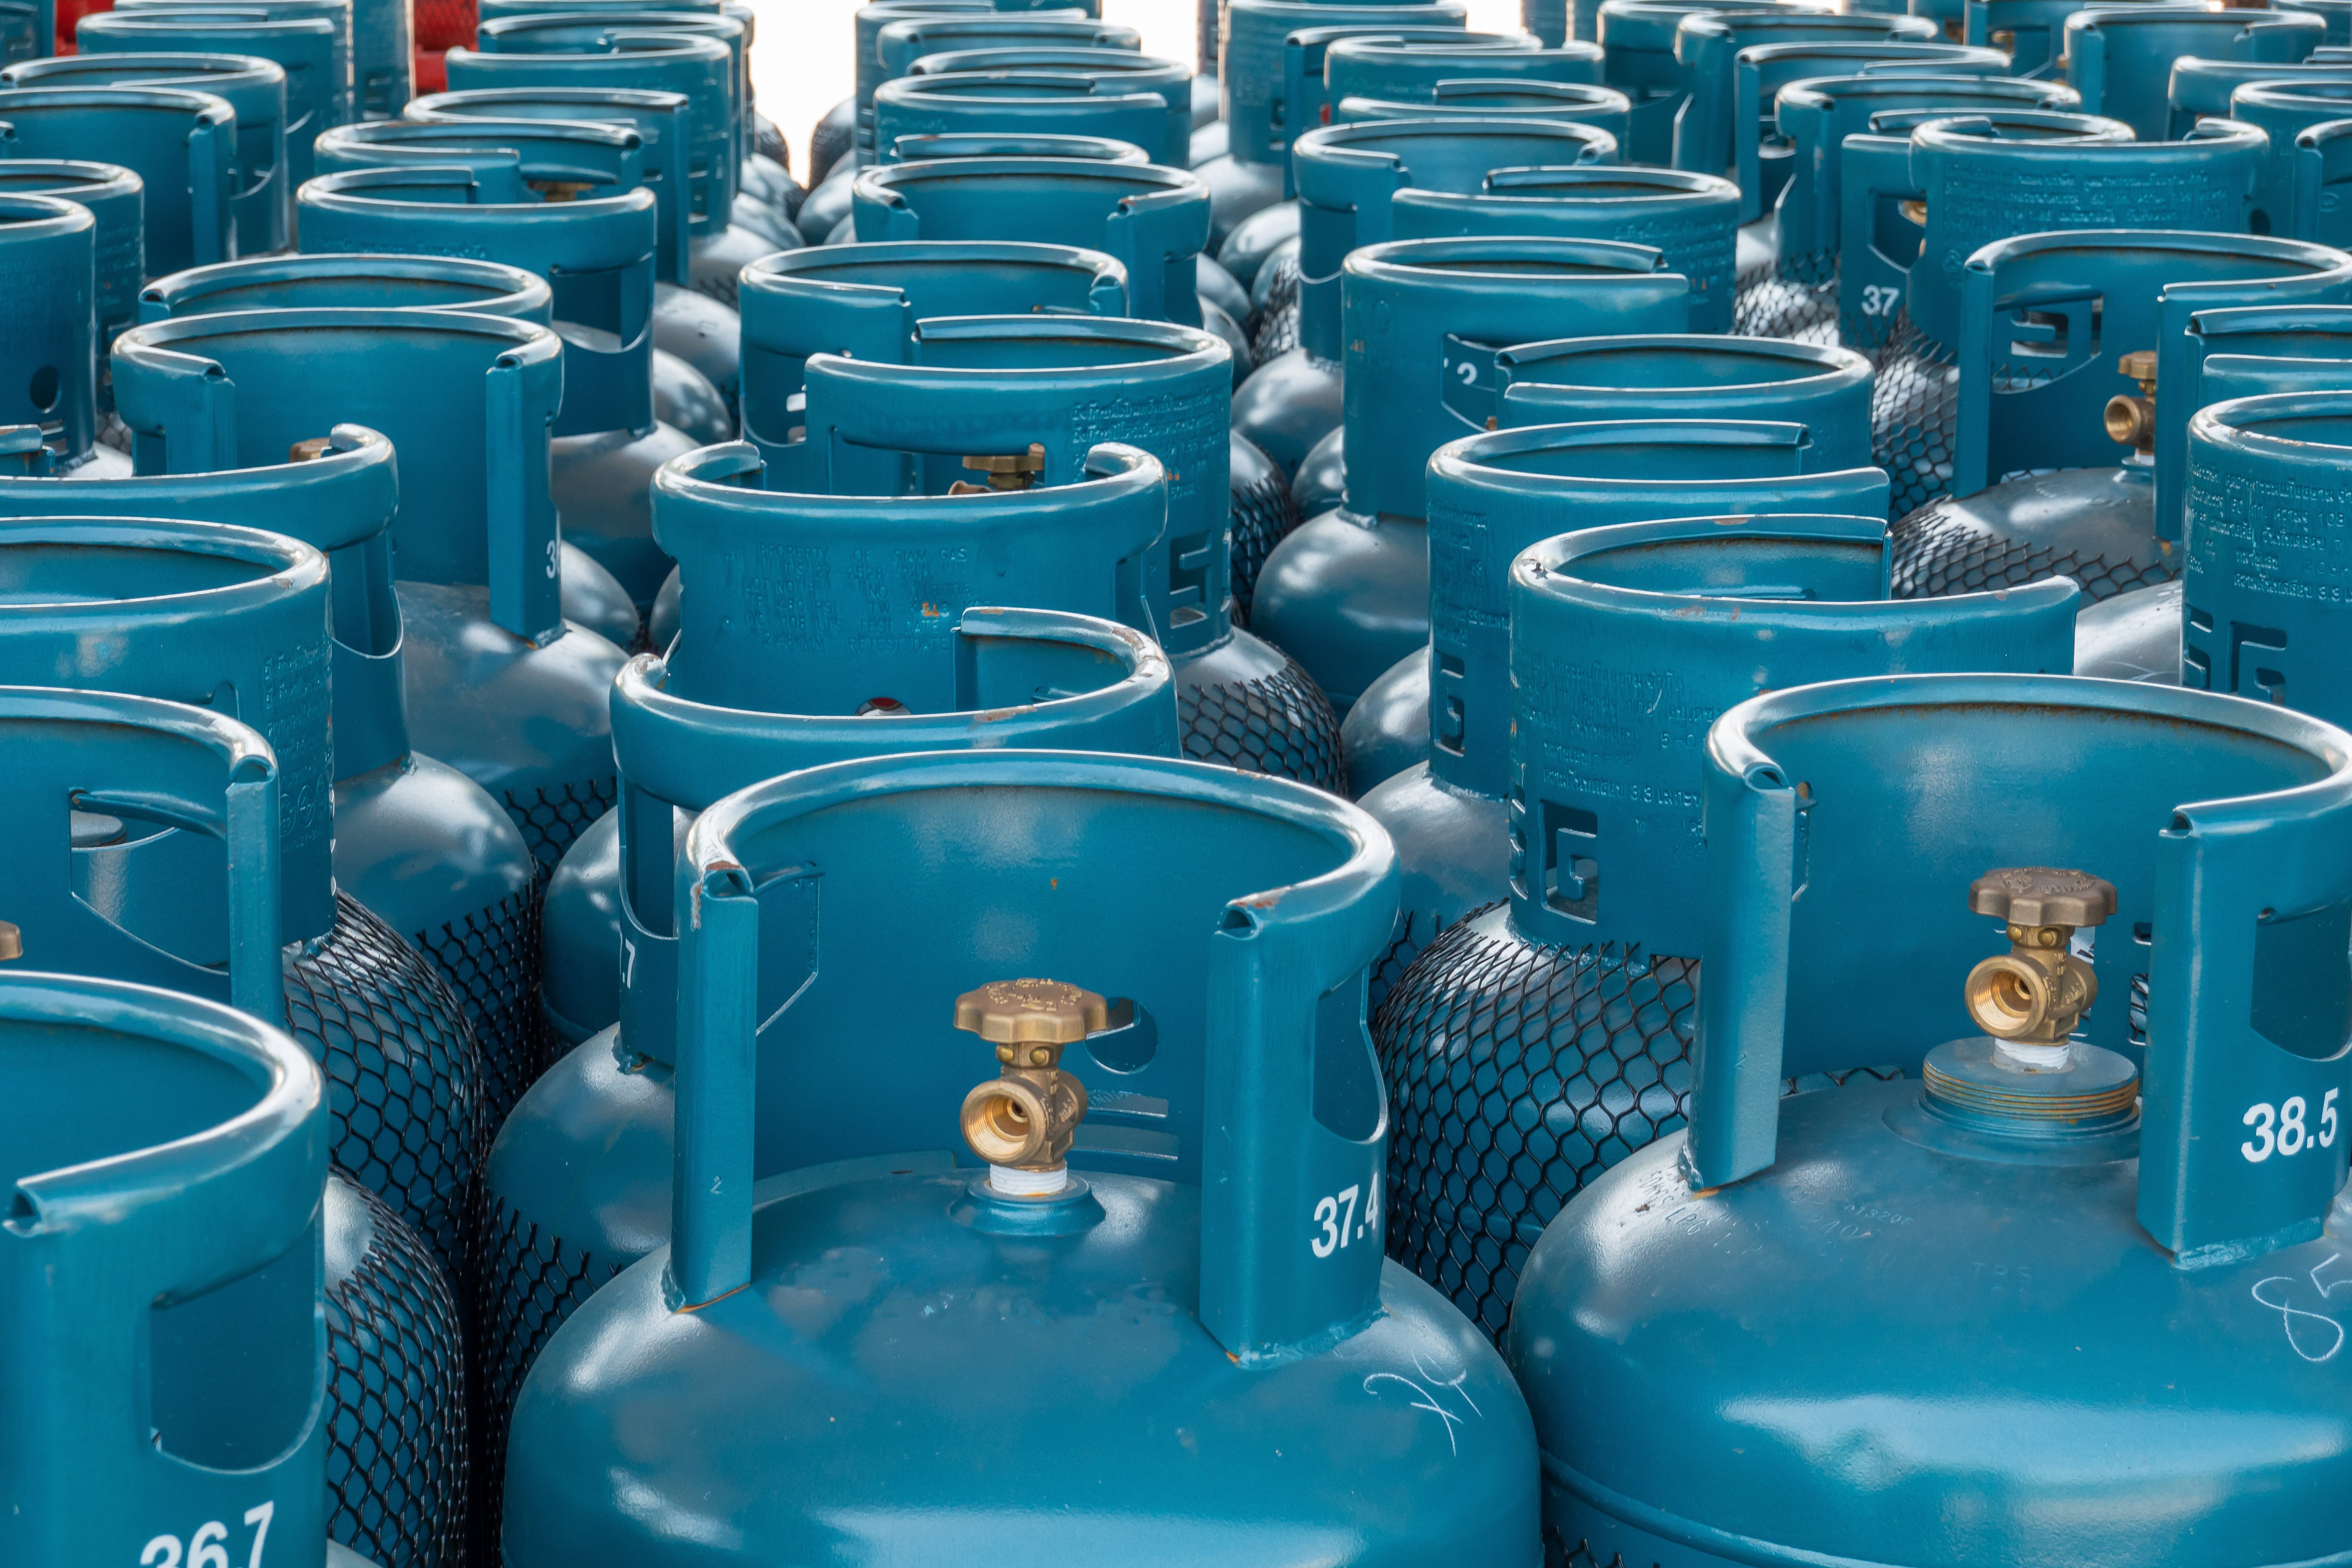 adobe stock image of LPG tanks being stored